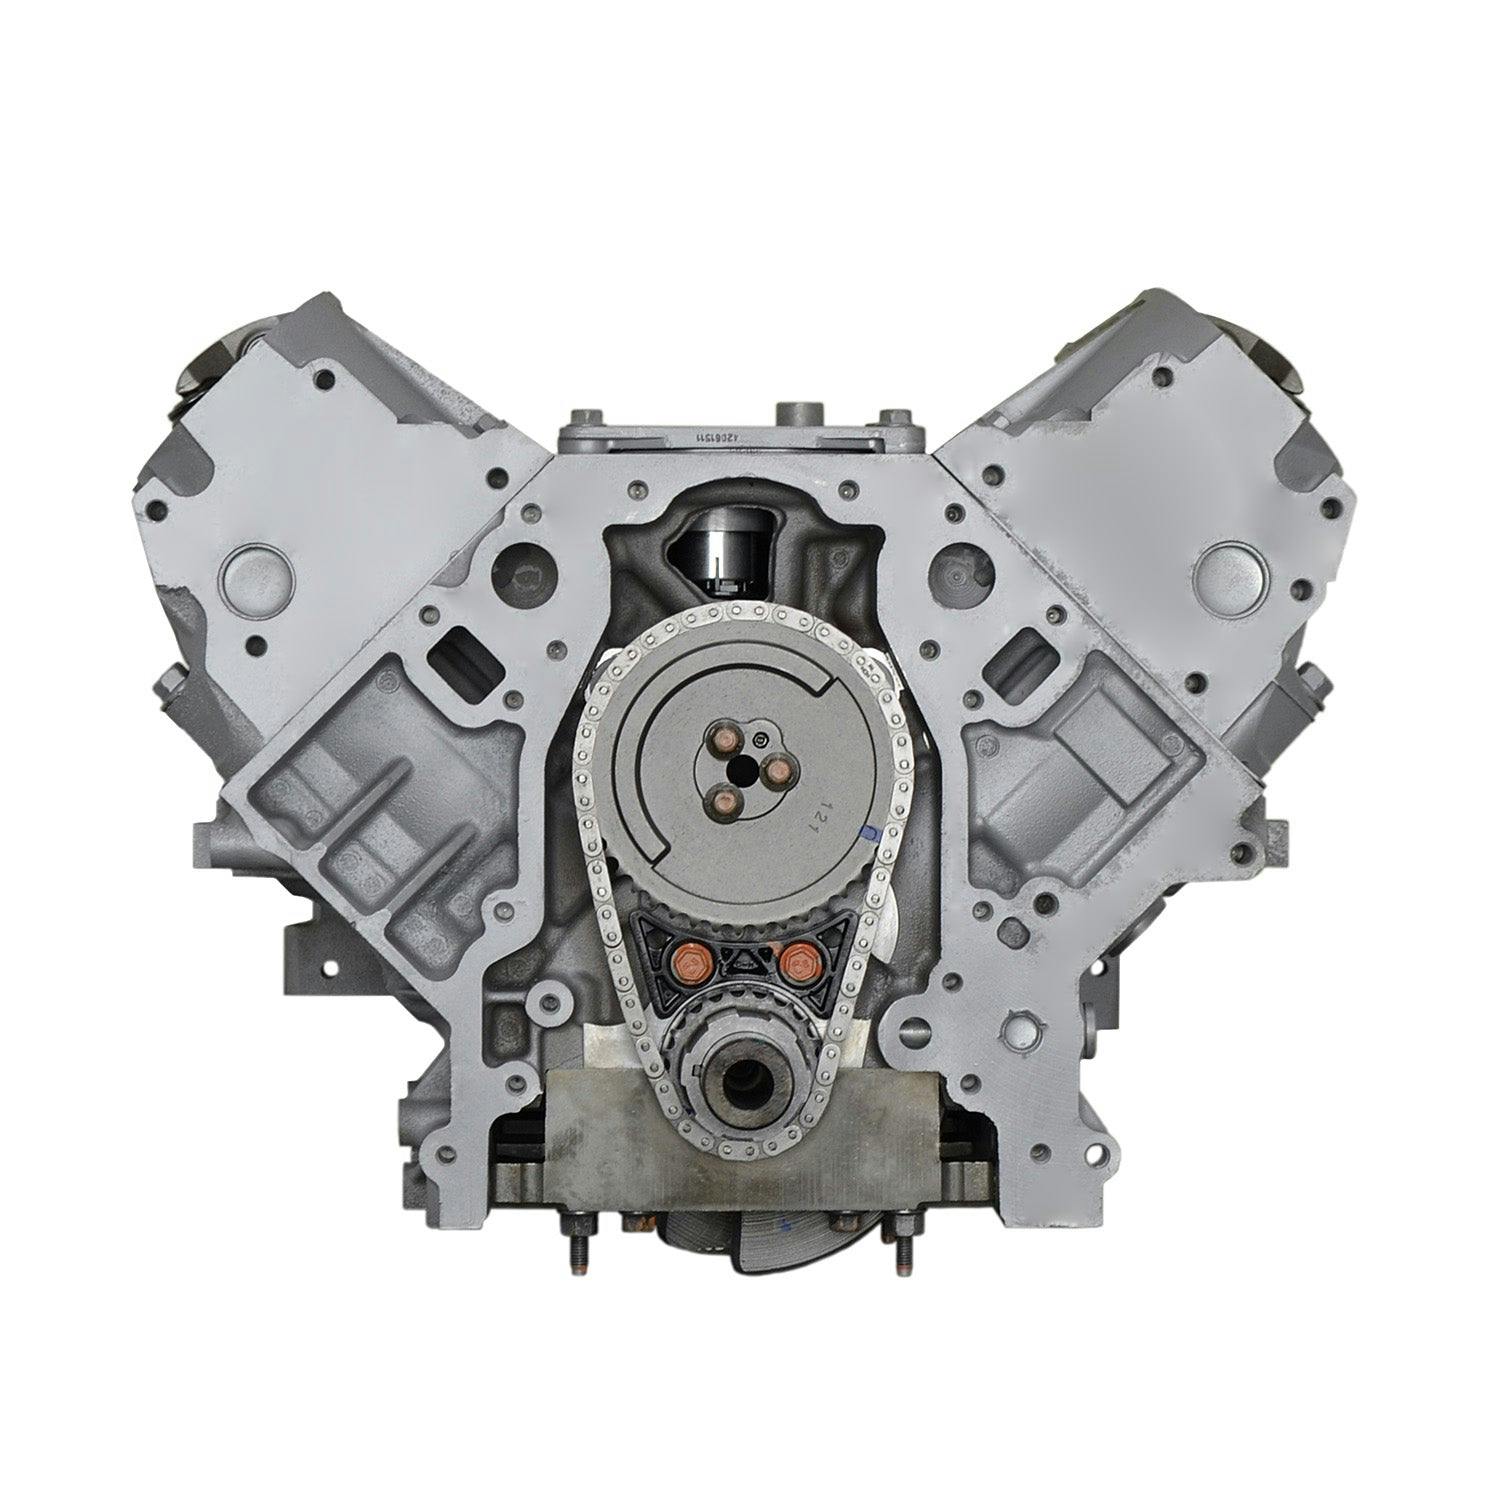 5.3L V8 Engine for 2005-2006 Buick Rainier/Chevrolet Trailblazer, Trailblazer EXT/GMC Envoy, Envoy XL, Envoy XUV/Isuzu Ascender/Saab 9-7x